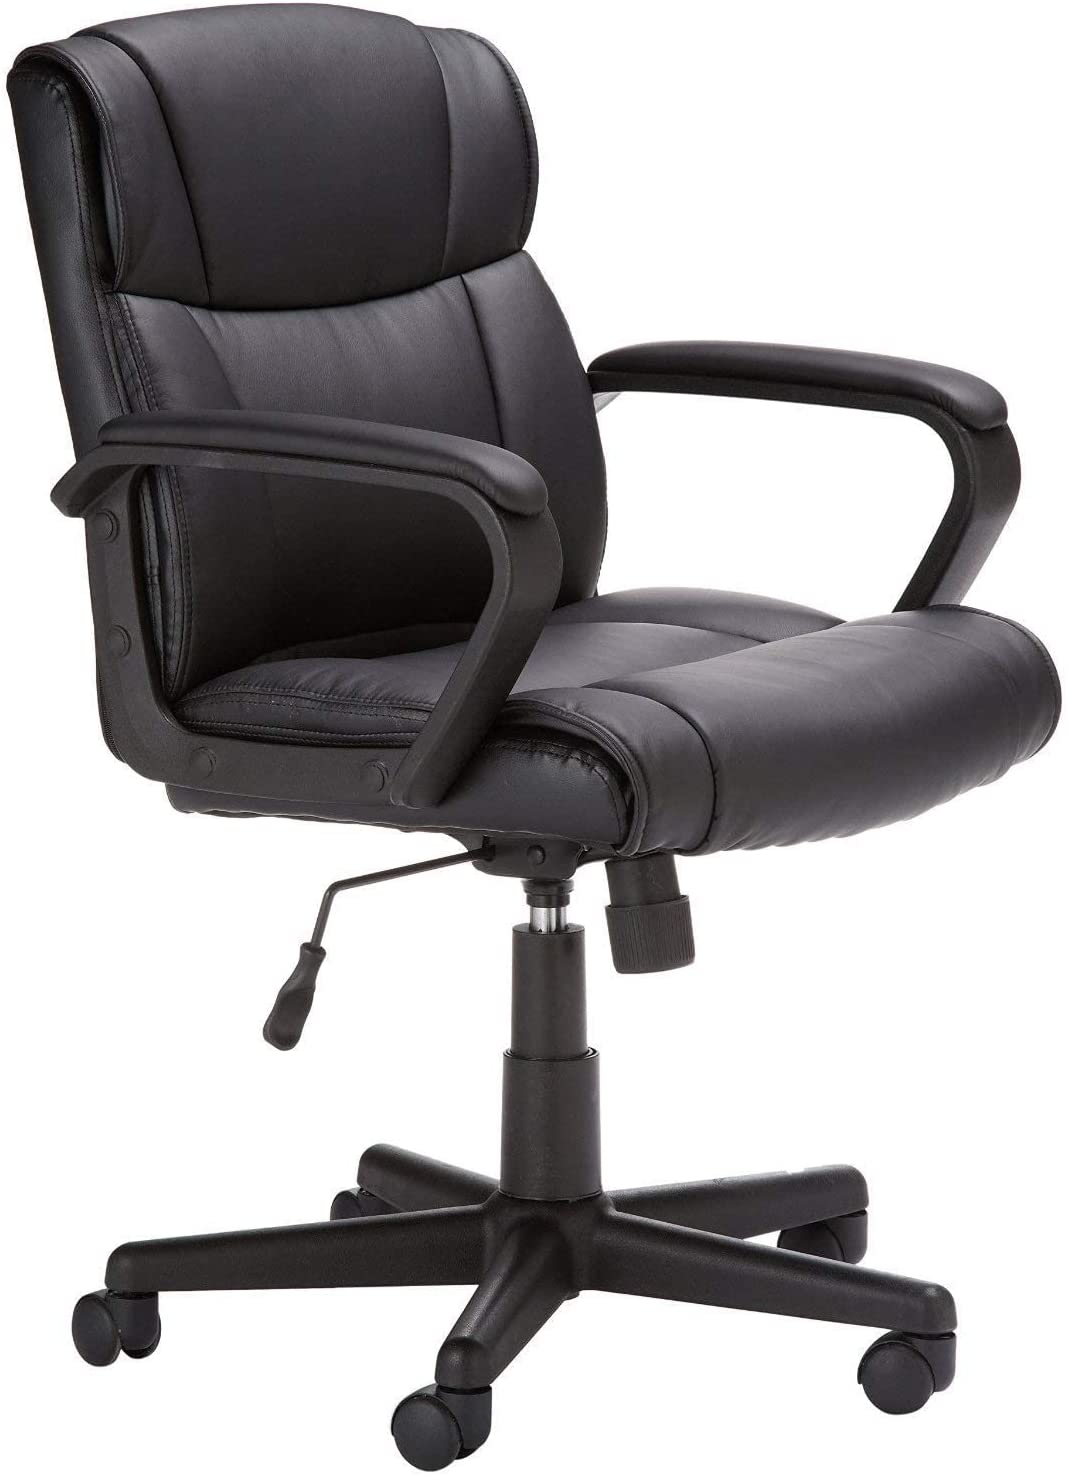 Amazon Basics Padded Office Chair